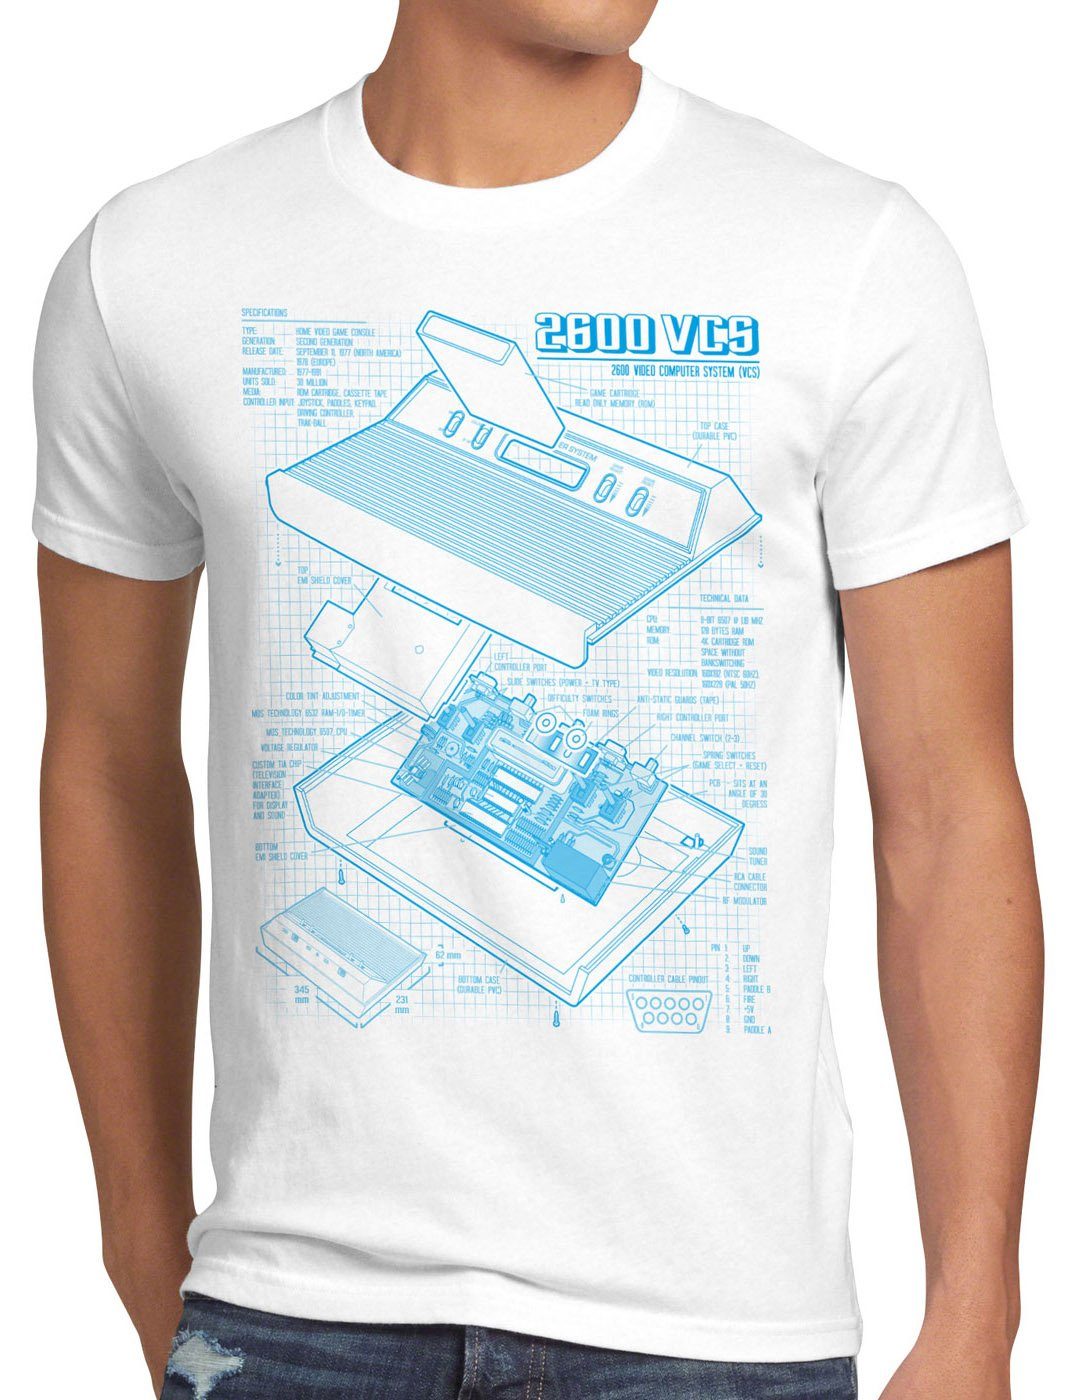 style3 Print-Shirt Herren T-Shirt VCS 2600 Heimcomputer Blaupause classic gamer weiß